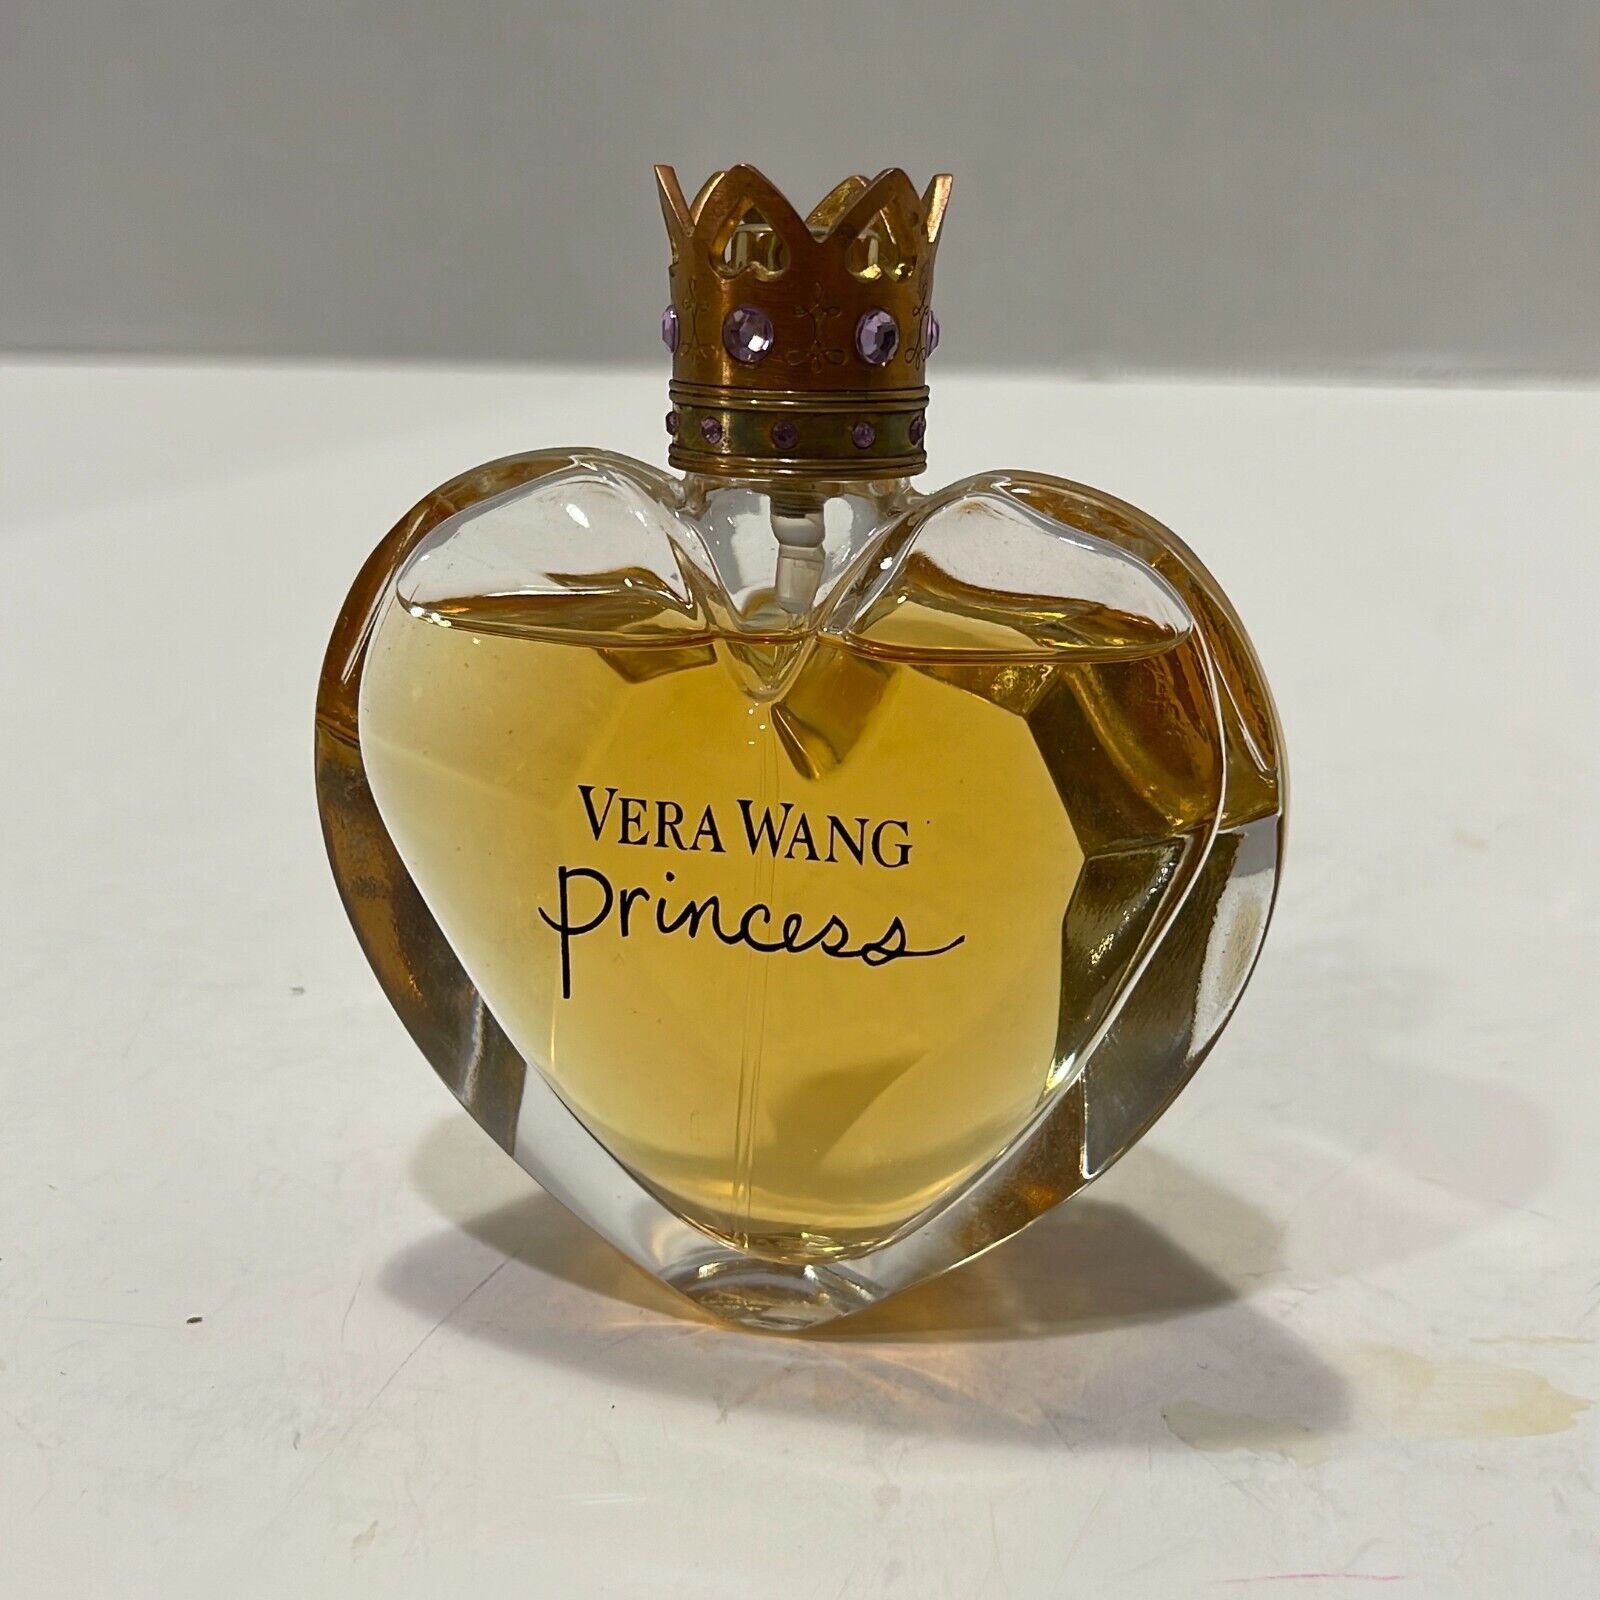 Princess By Vera Wang 1.7 FL OZ Eau de Toilette EDT Perfume Spray For Womens